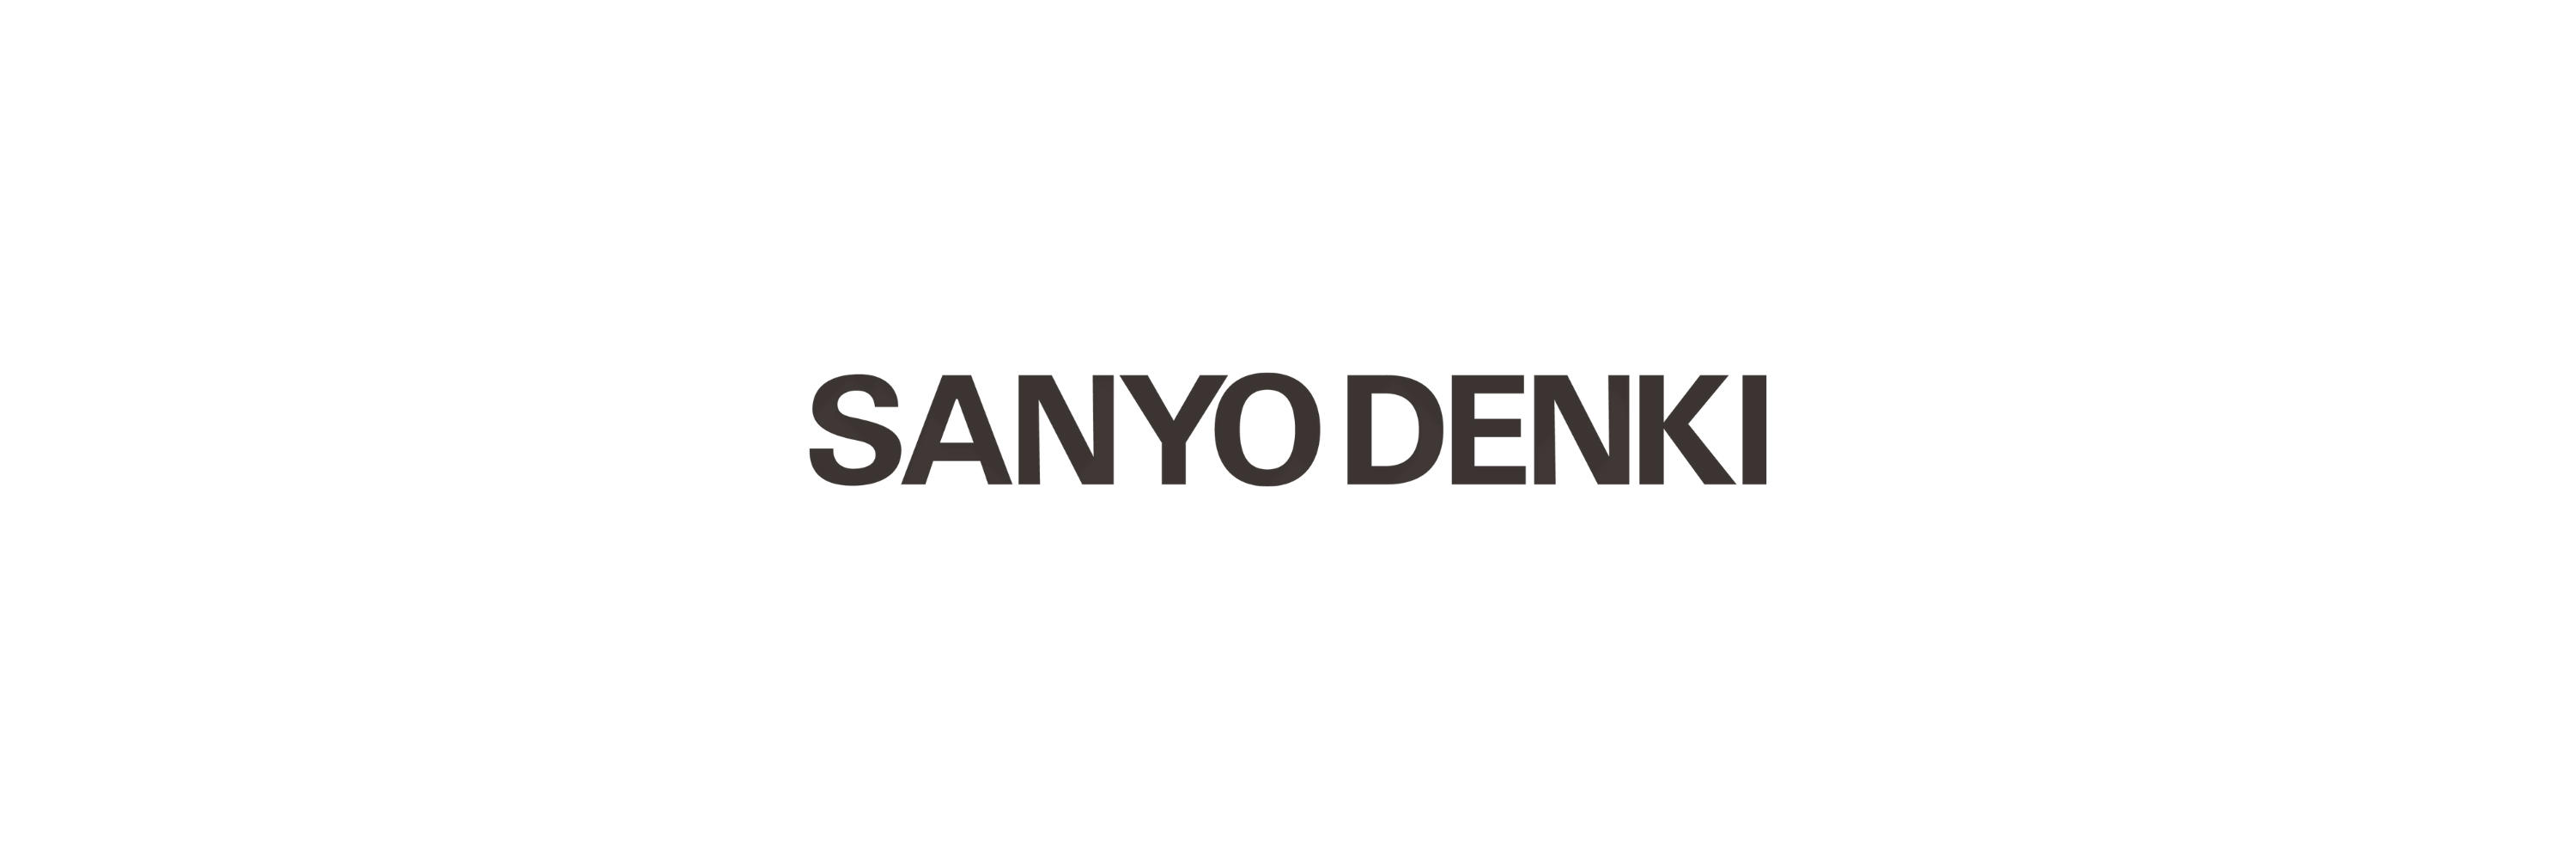 SANMOTION / SANYO DENKI - Klenk Maschinenhandel